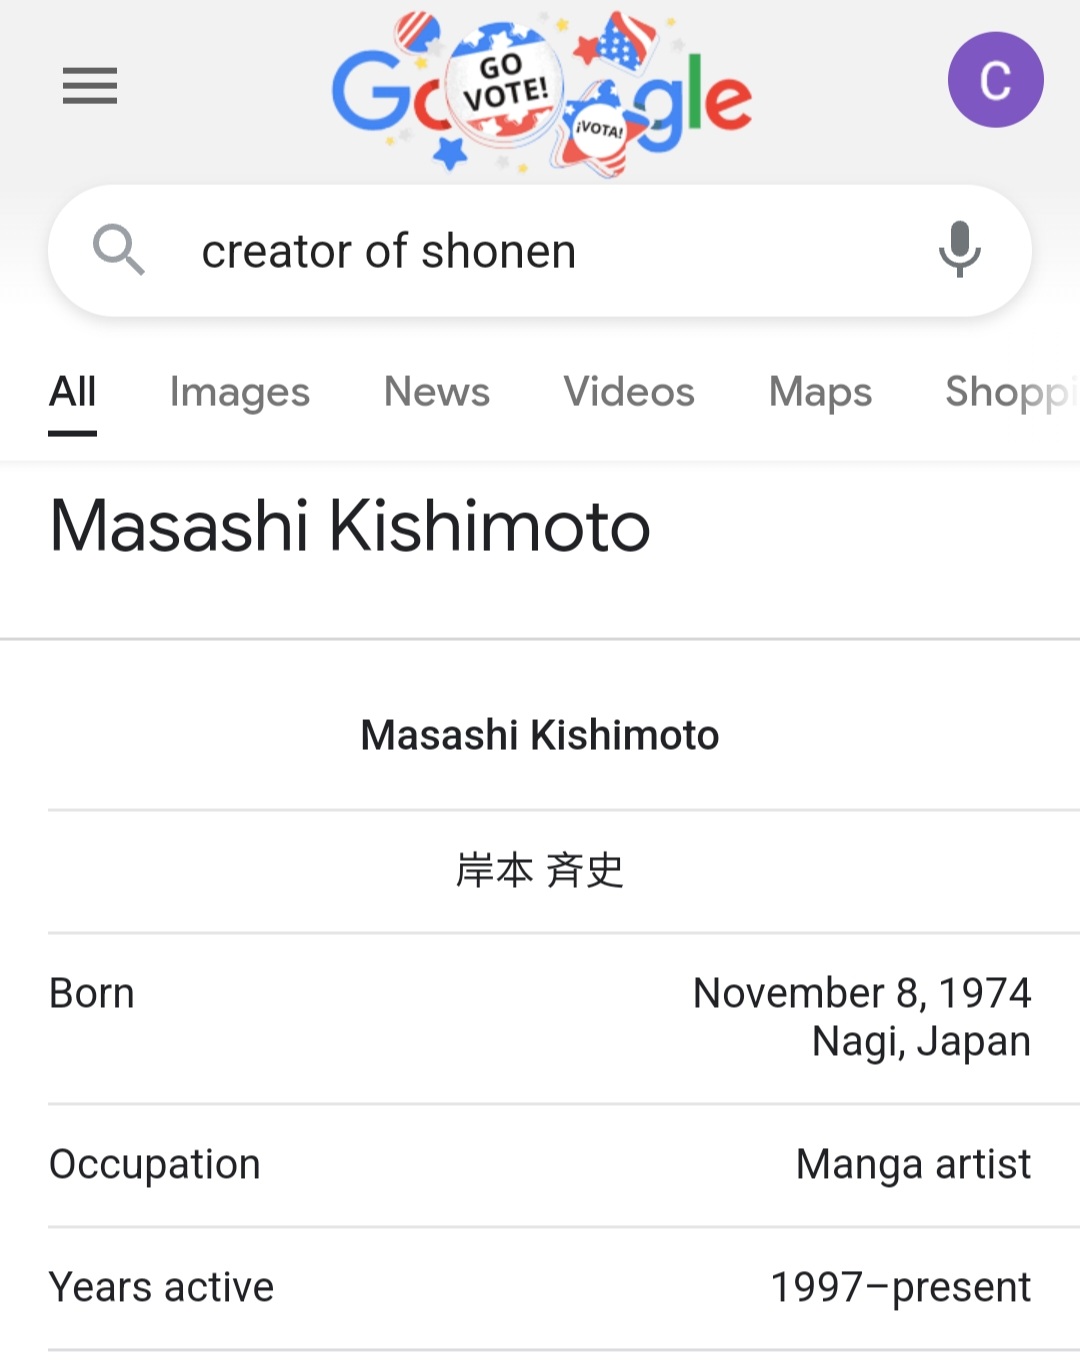 Happy Birthday to the creator of Shonen Masashi Kishimoto 